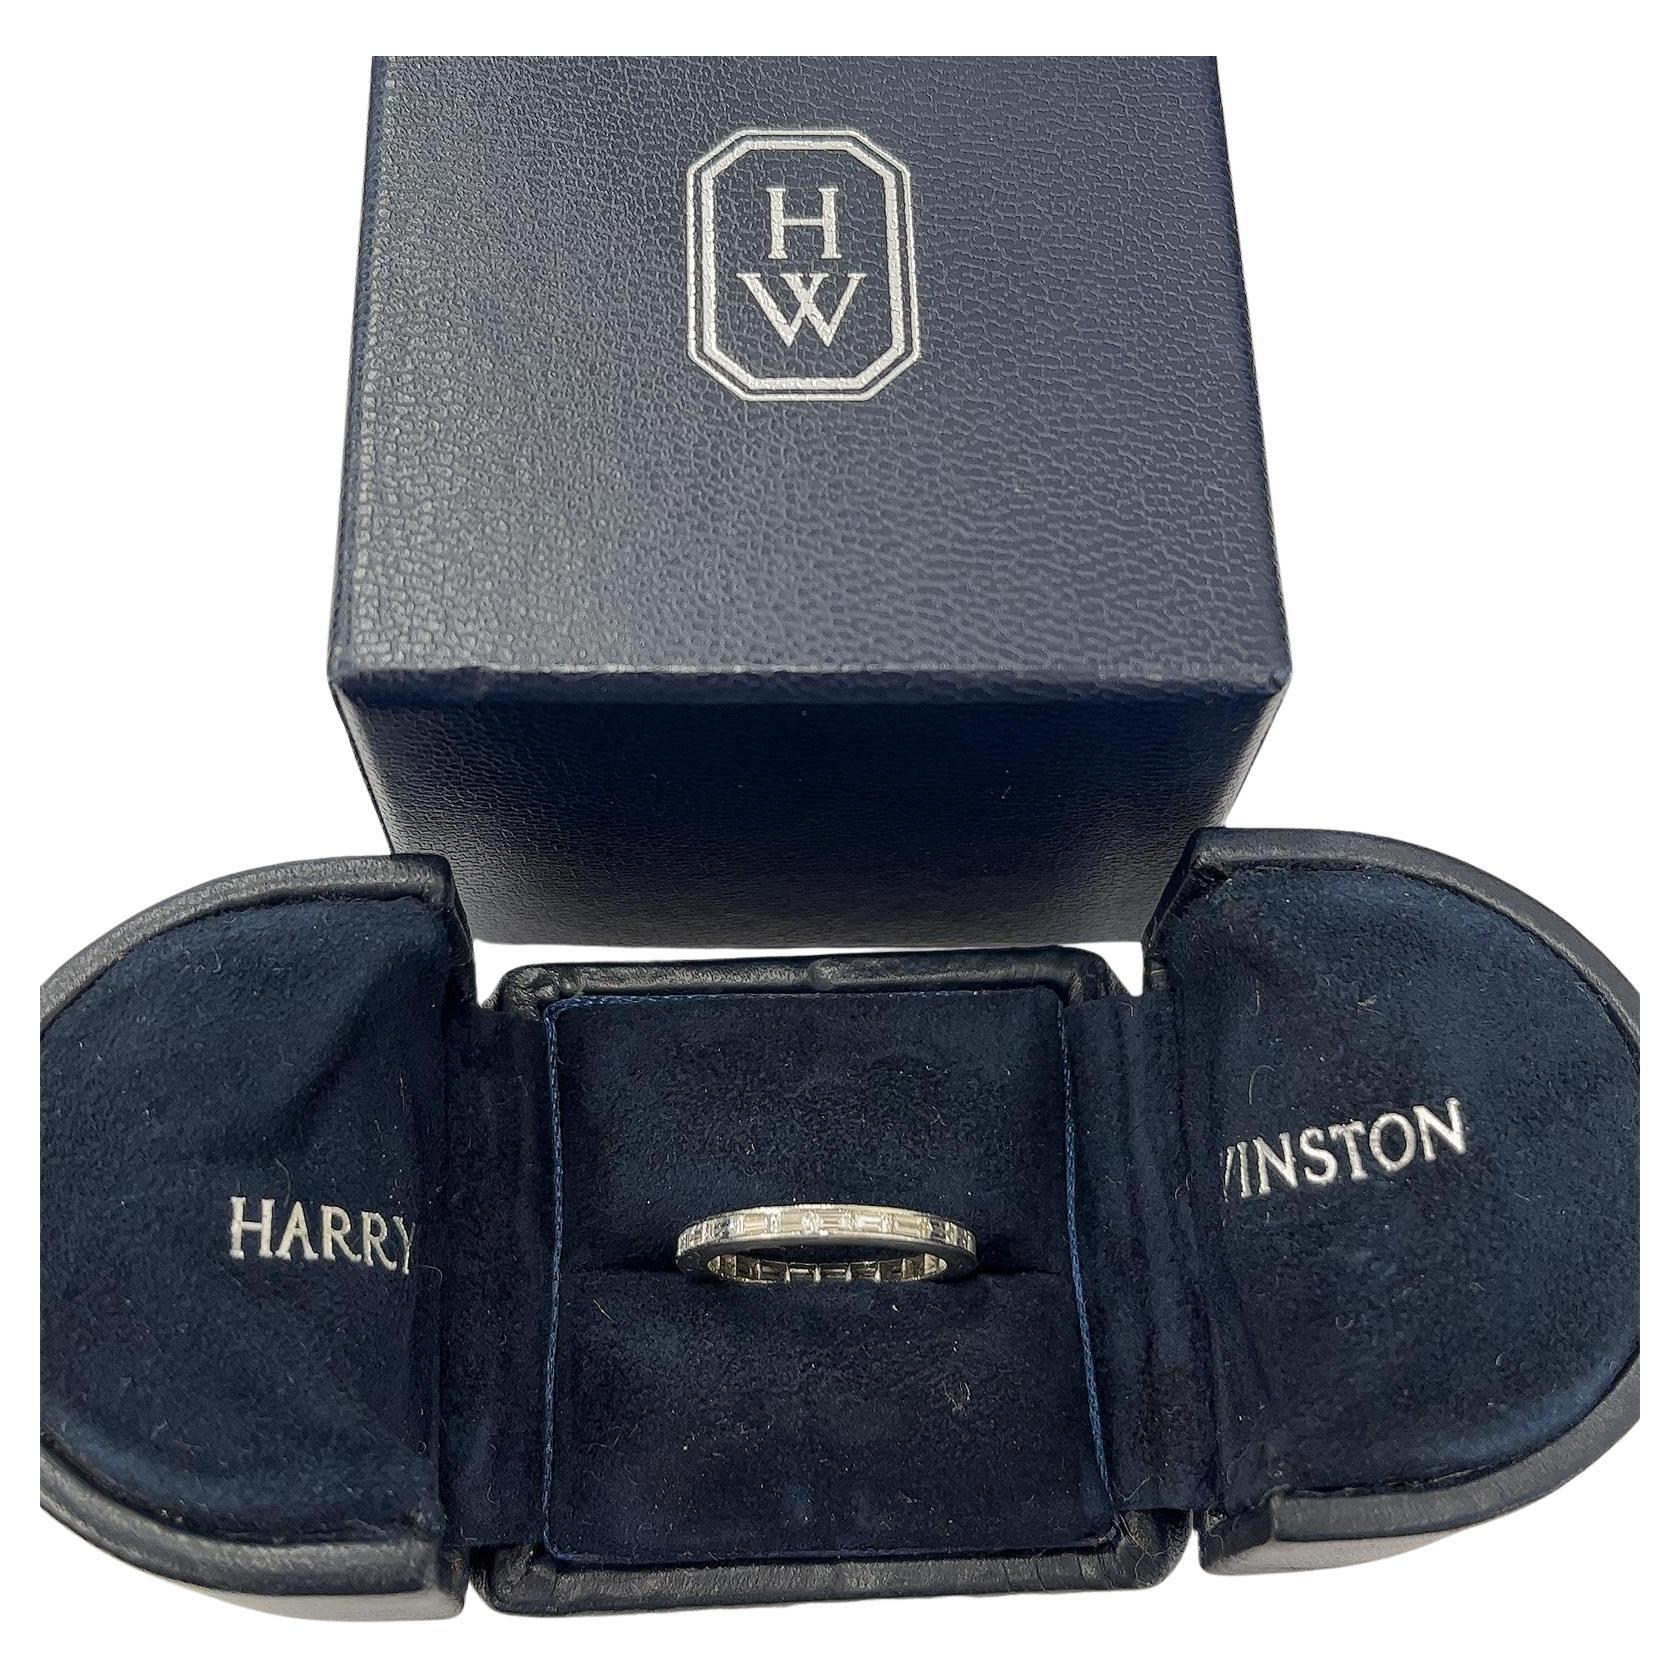 Harry Winston Diamond Wedding Band Set With Baguette Diamonds For Sale